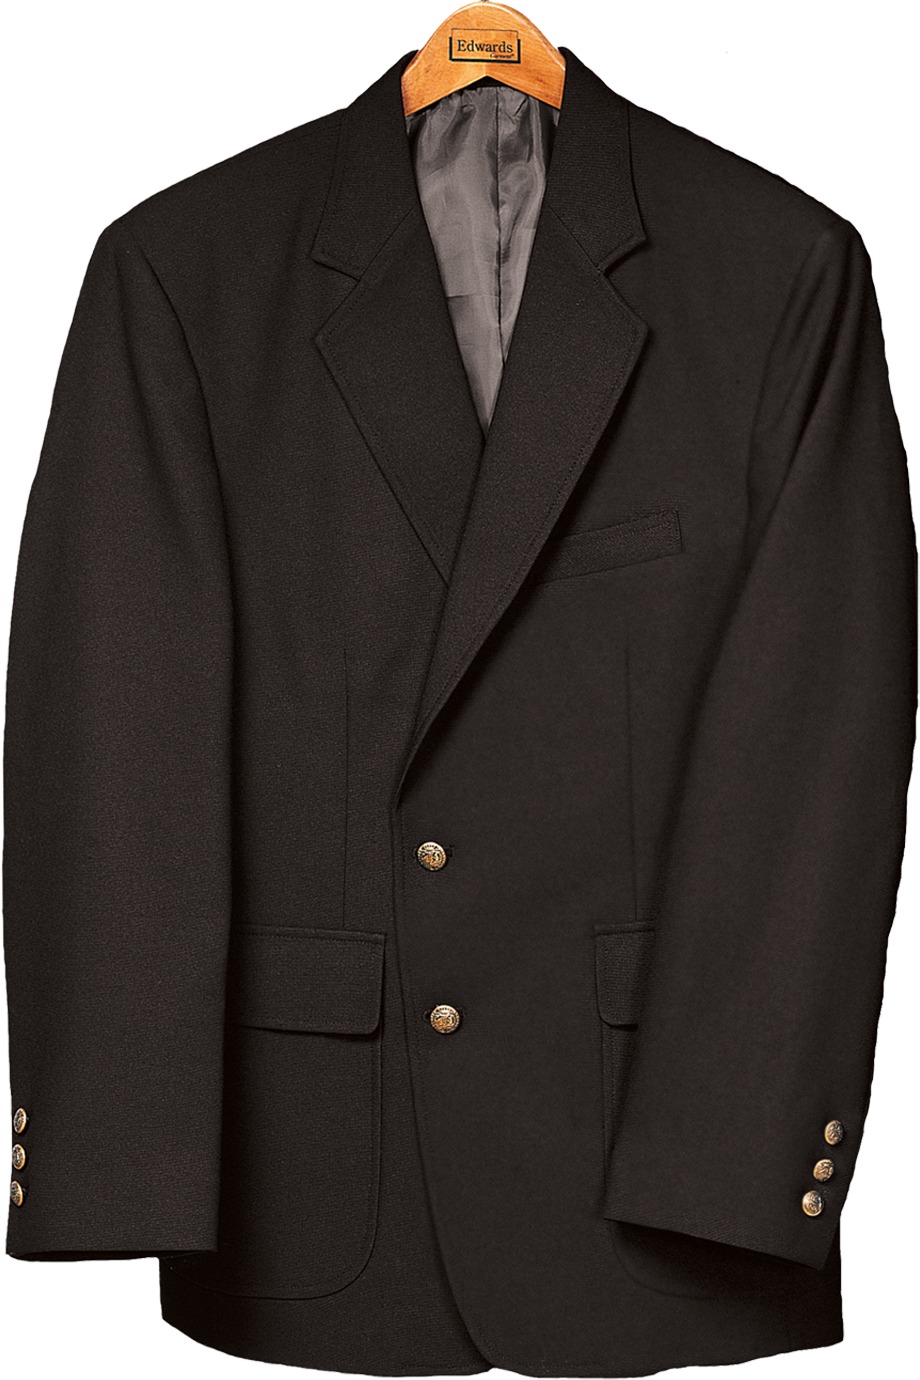 Edwards Garment 3500 - Men's Value Poly Blazer